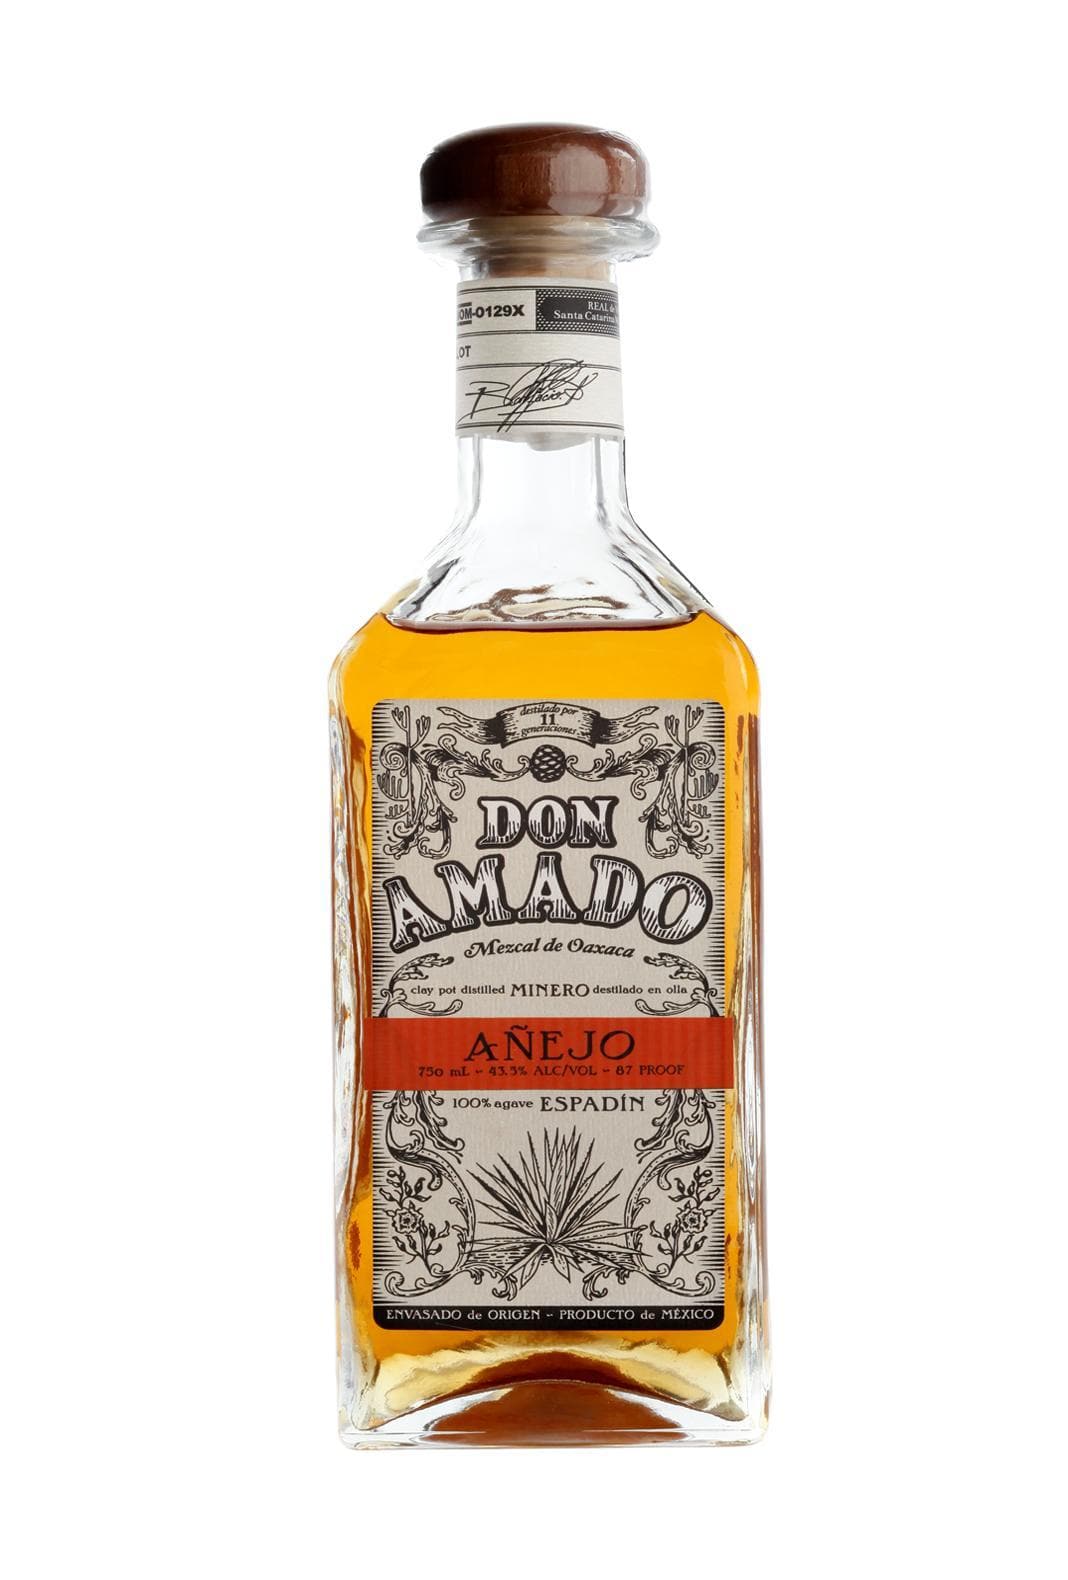 Don Amado Mezcal Anejo Oaxaca 100% Agave 40% 750ml | Liquor & Spirits | Shop online at Spirits of France